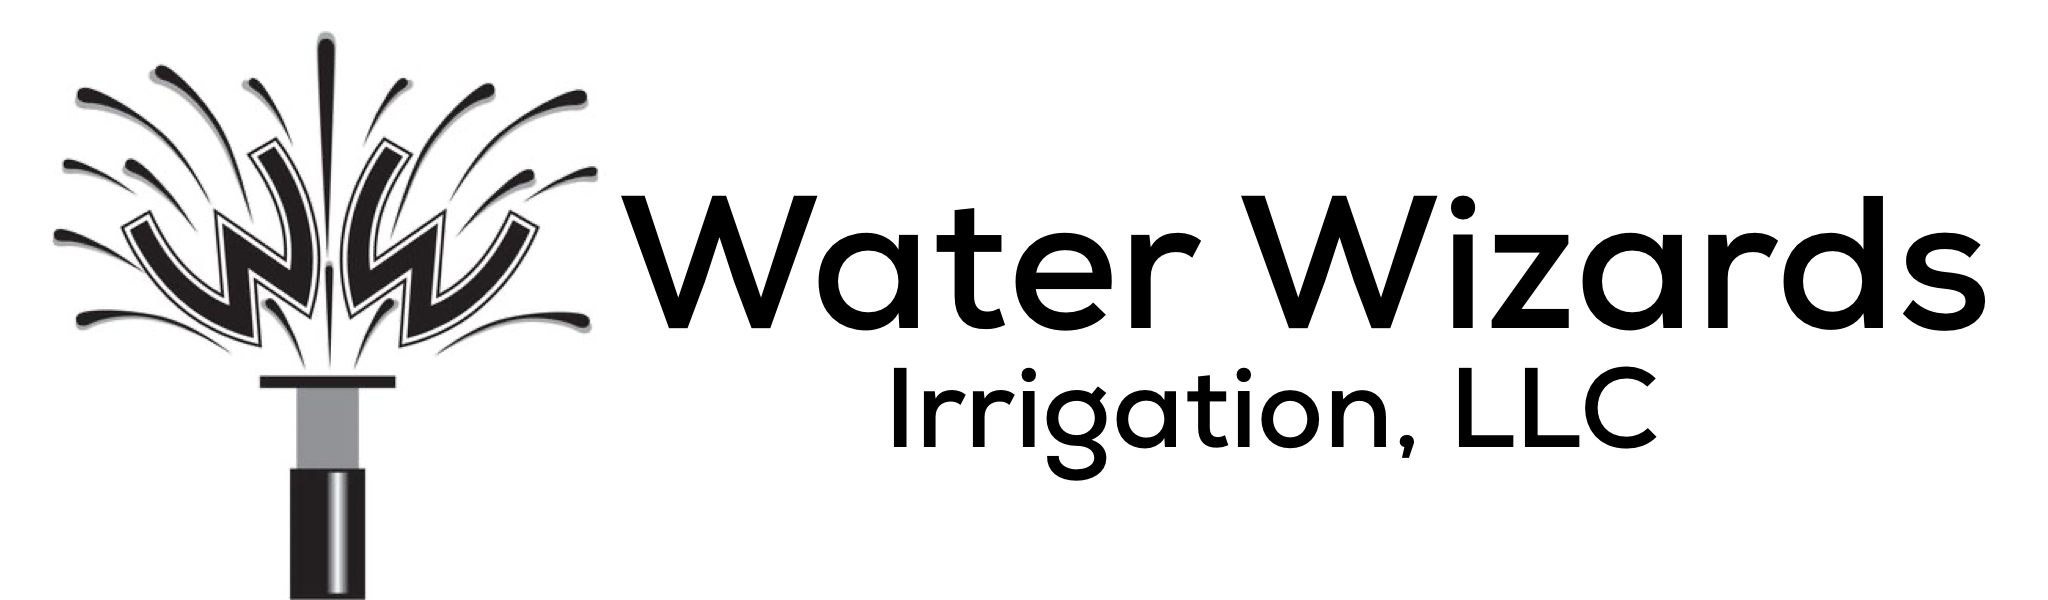 Water Wizards Irrigation